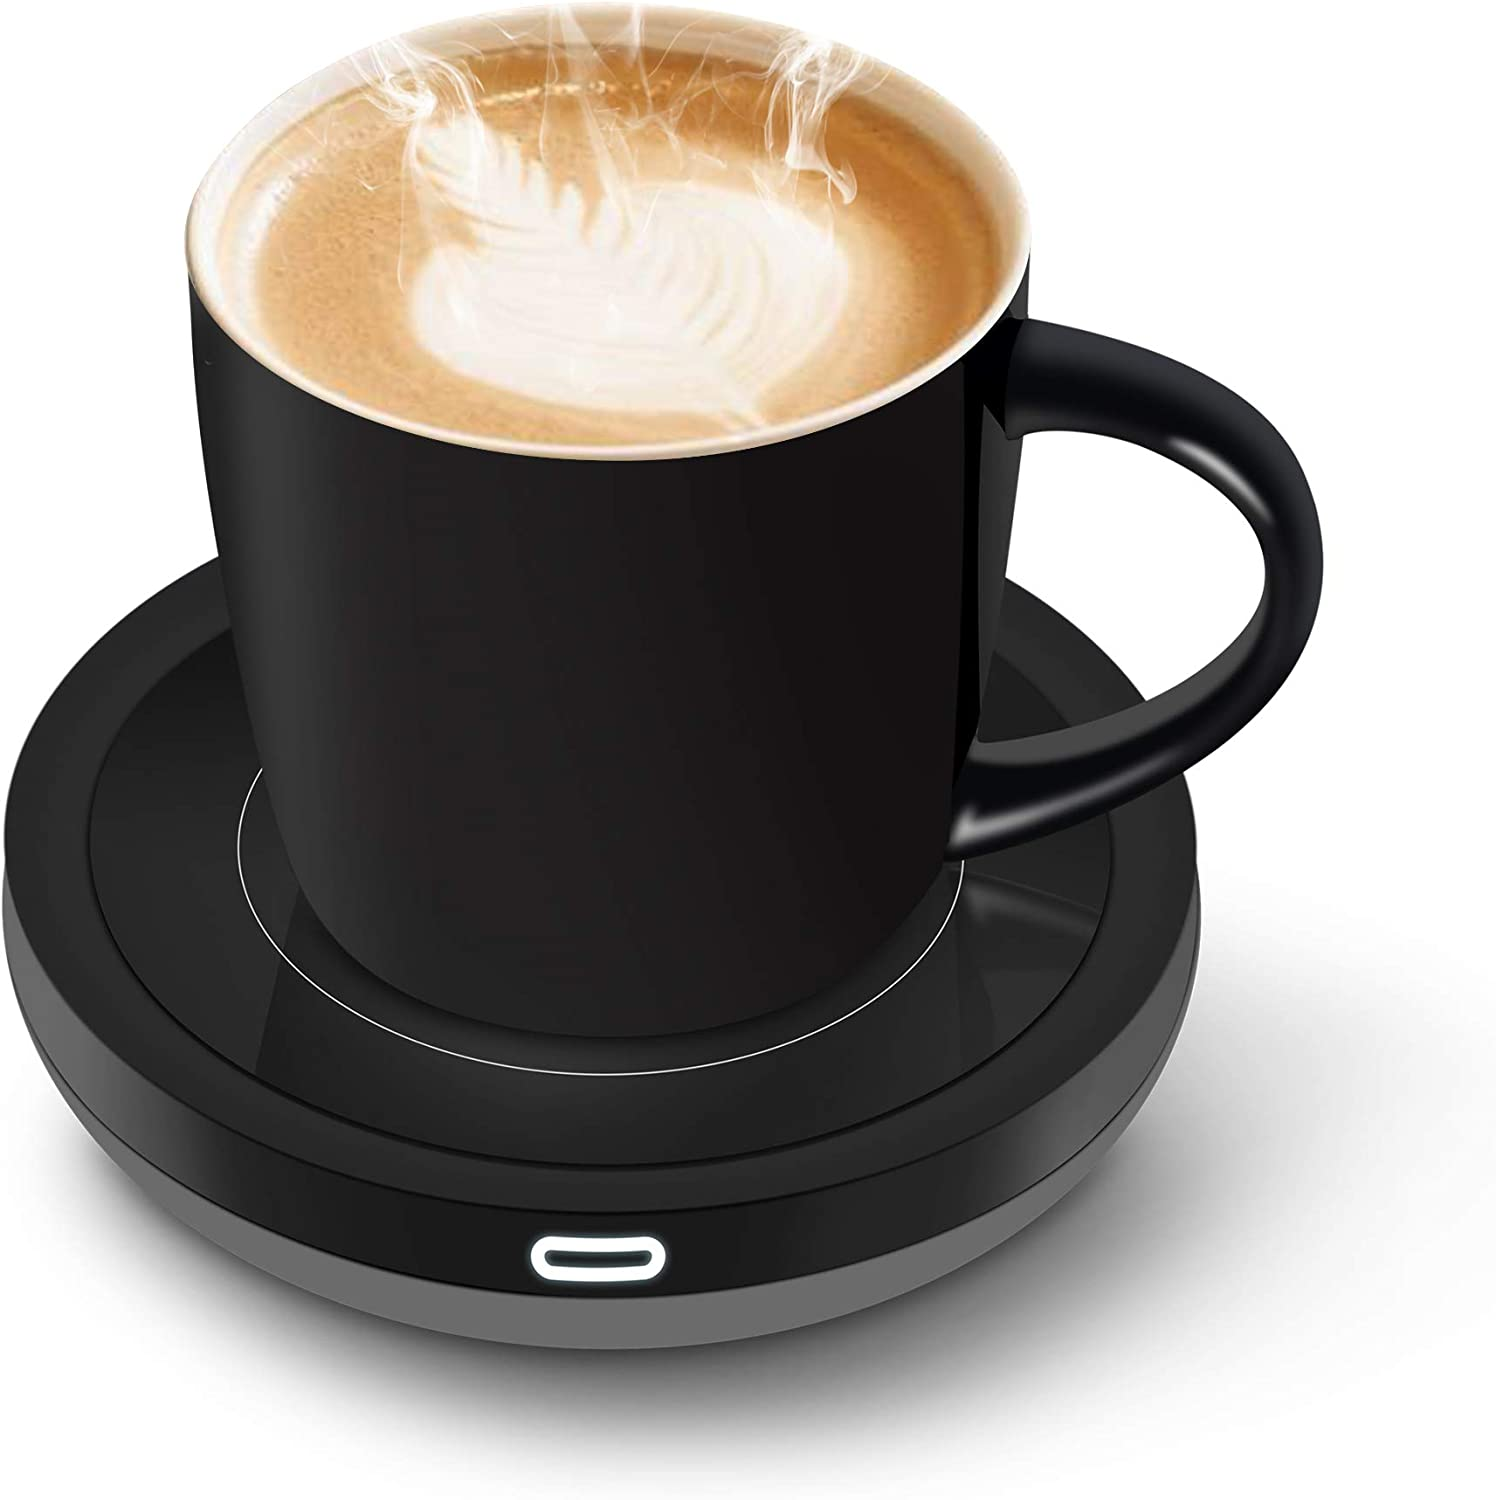 Portable Coffee Mug Warmer Adjustable 3 Temperature Settings Smart